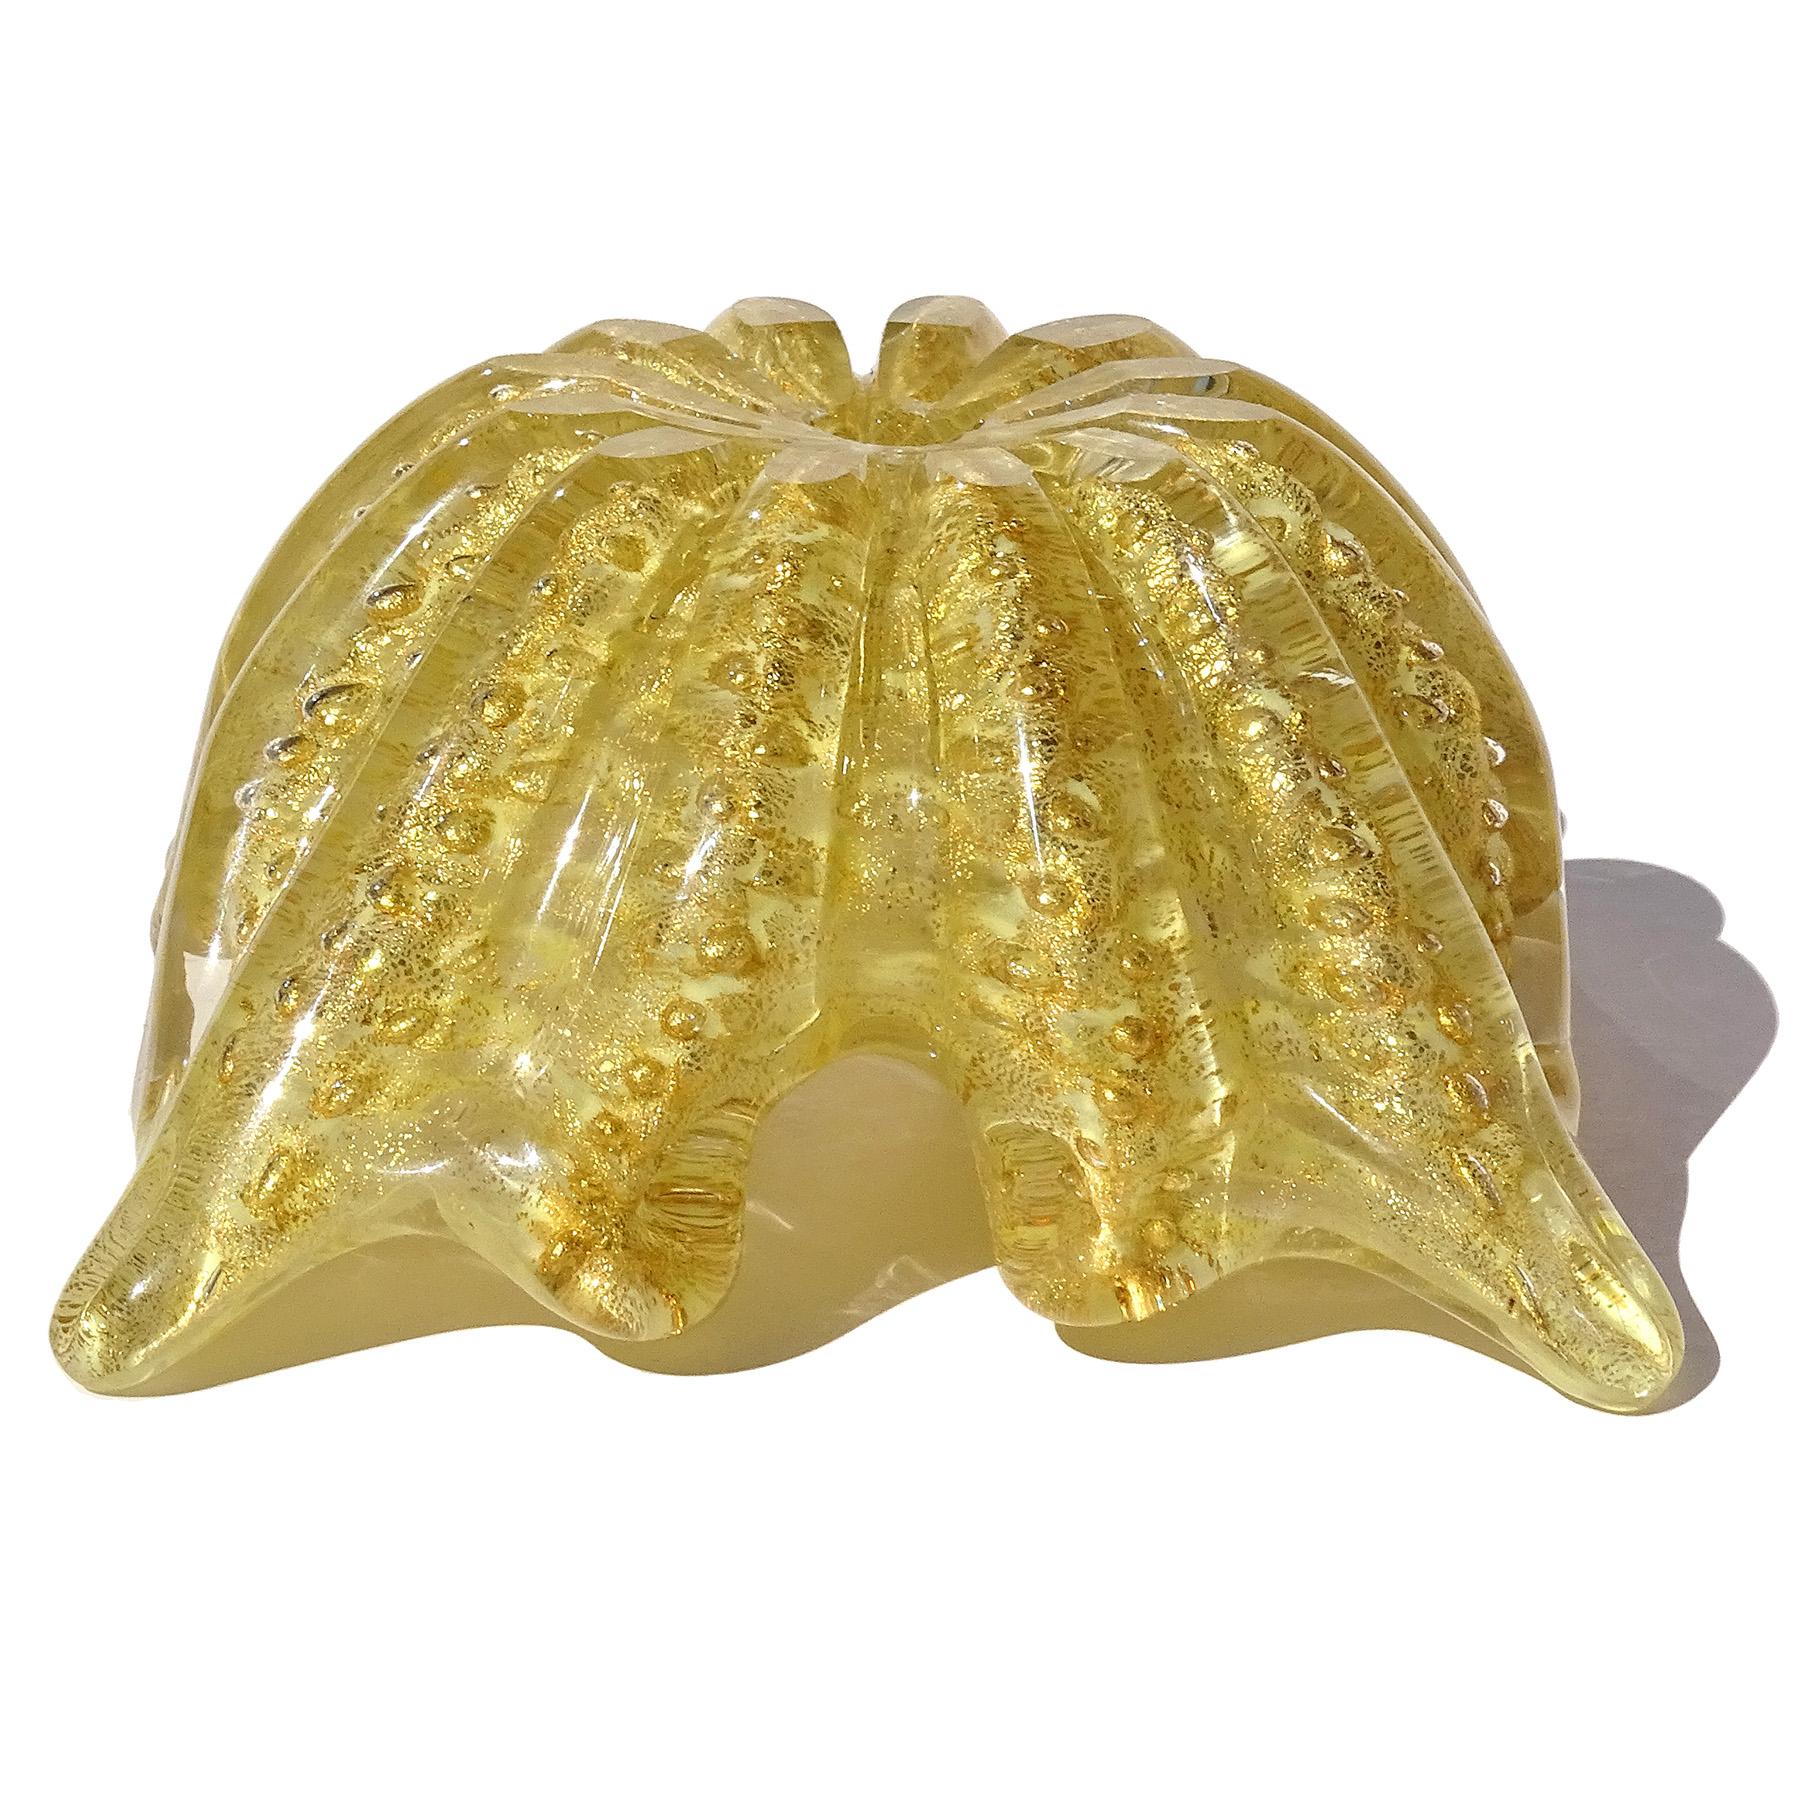 Barovier Toso Murano Yellow Gold Flecks Italian Art Glass Spike Bowl Ashtray For Sale 2